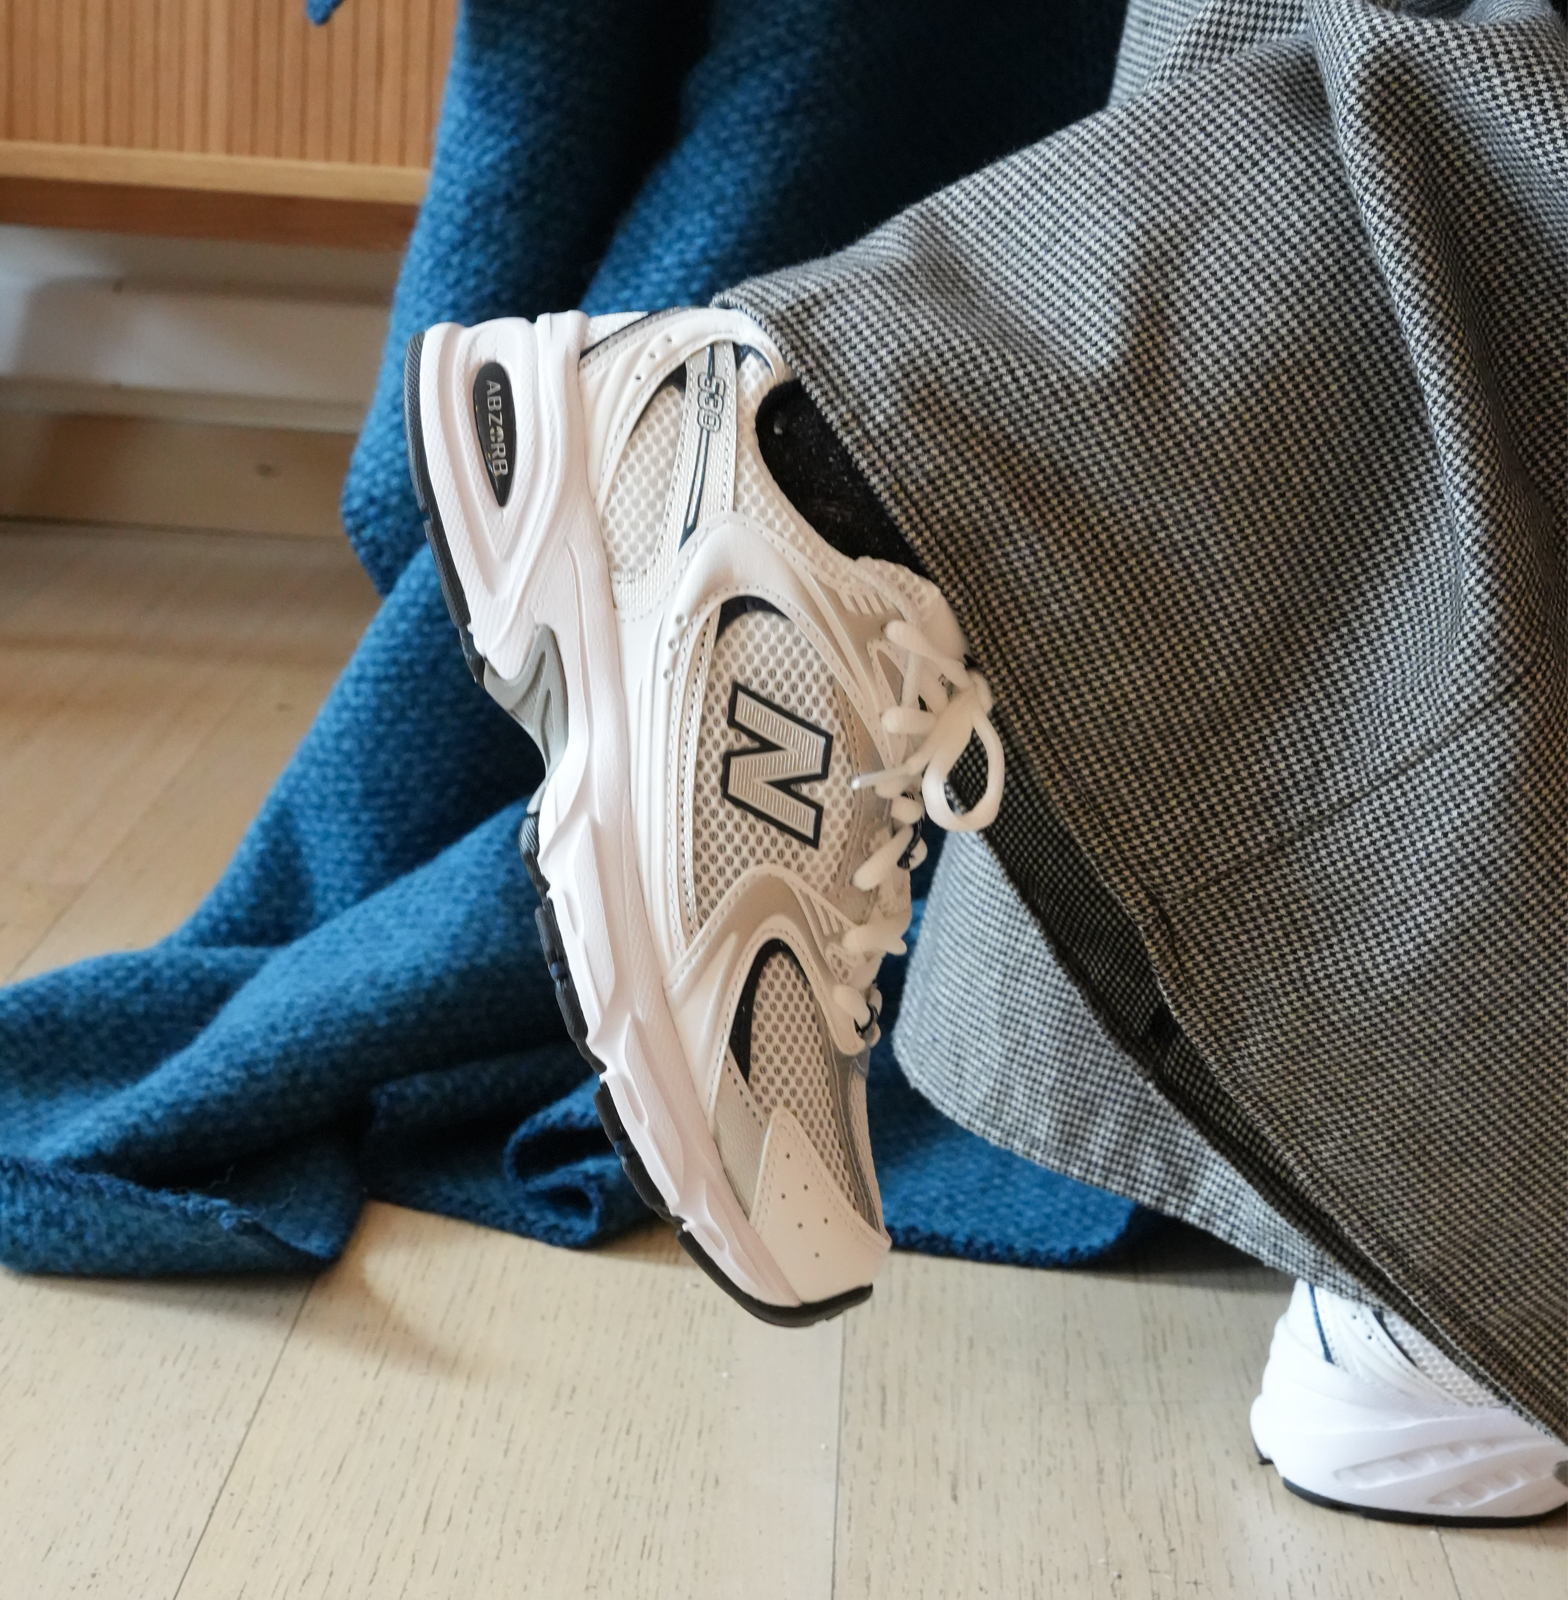 Mr530sg – New Balance | L'Original - Sneakers Shop Belgium